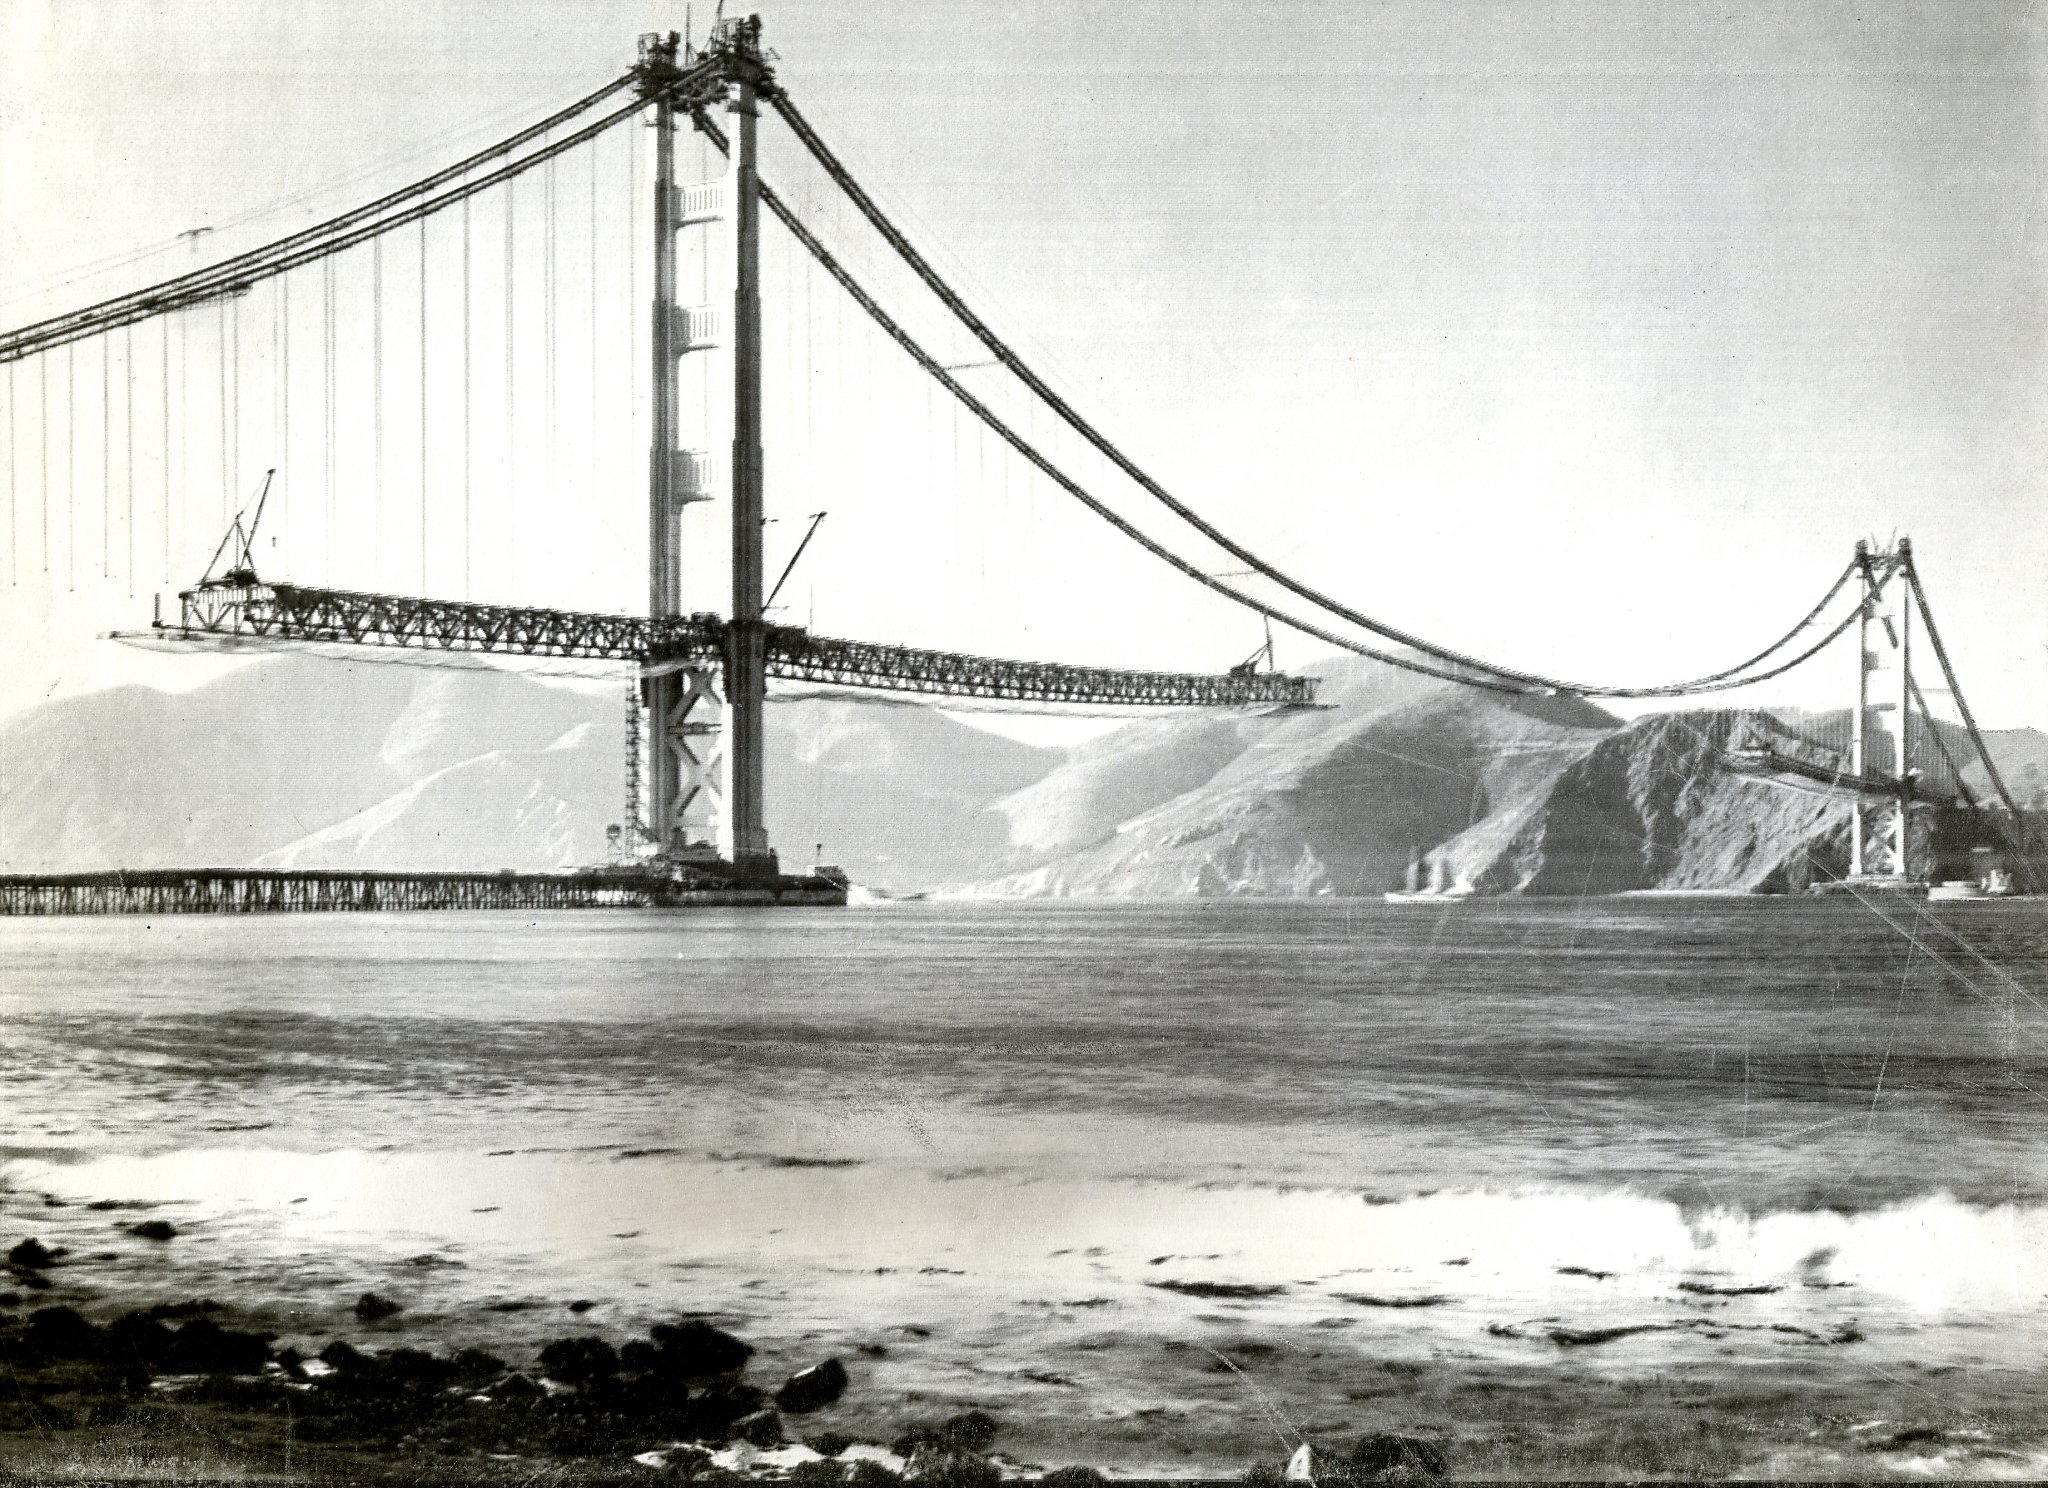 89 Years Ago Construction Began On The Golden Gate Bridge